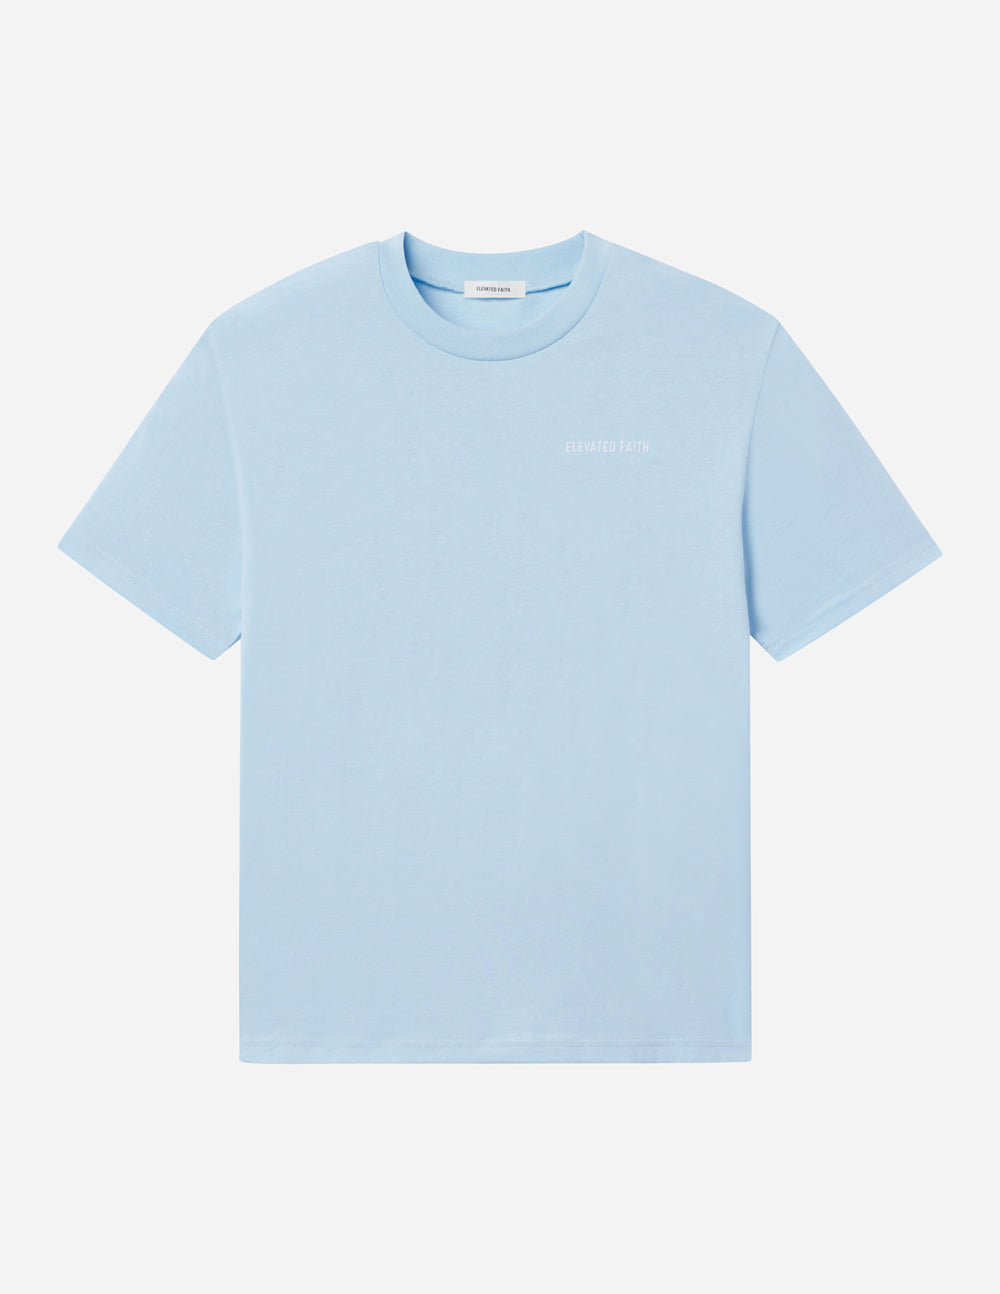 Basics Dream Blue Unisex Tee | Christian T-Shirts | Elevated Faith